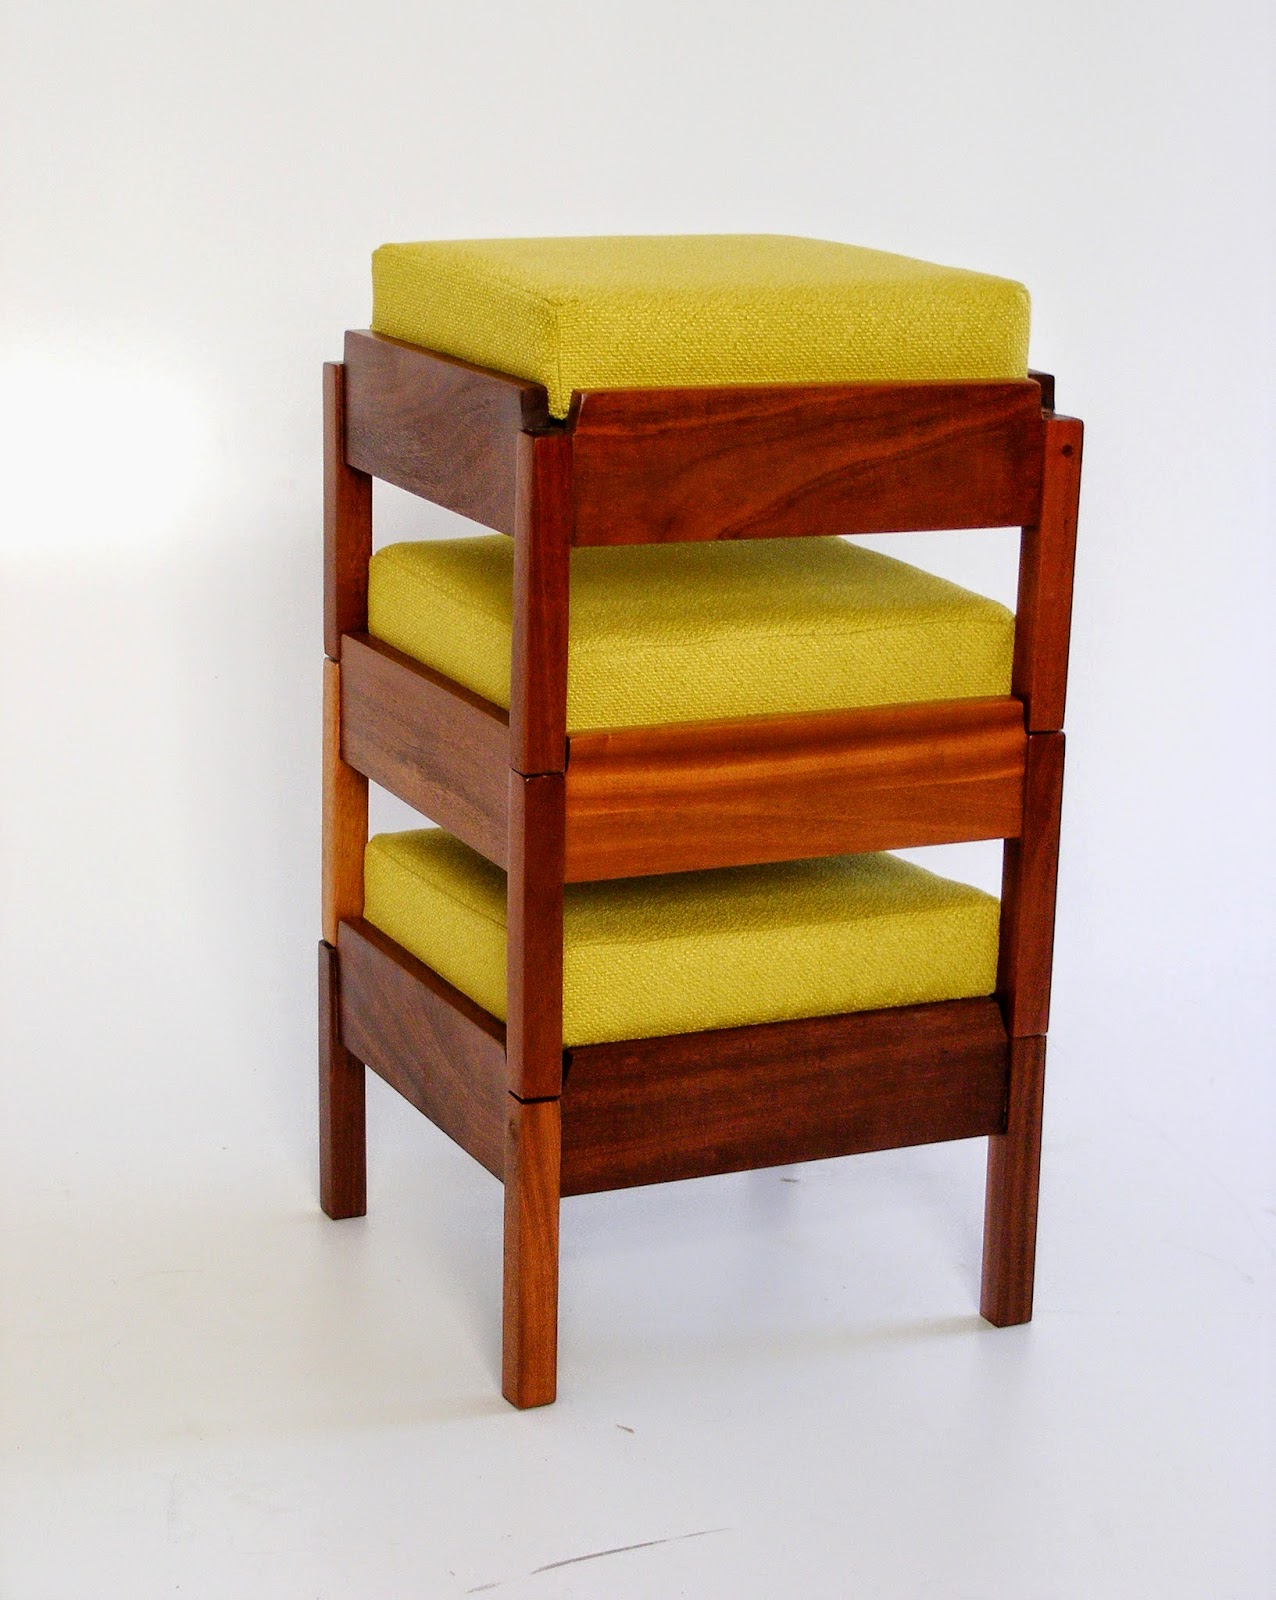 VAMP FURNITURE: New vintage furniture at Vamp - 17 April 2014